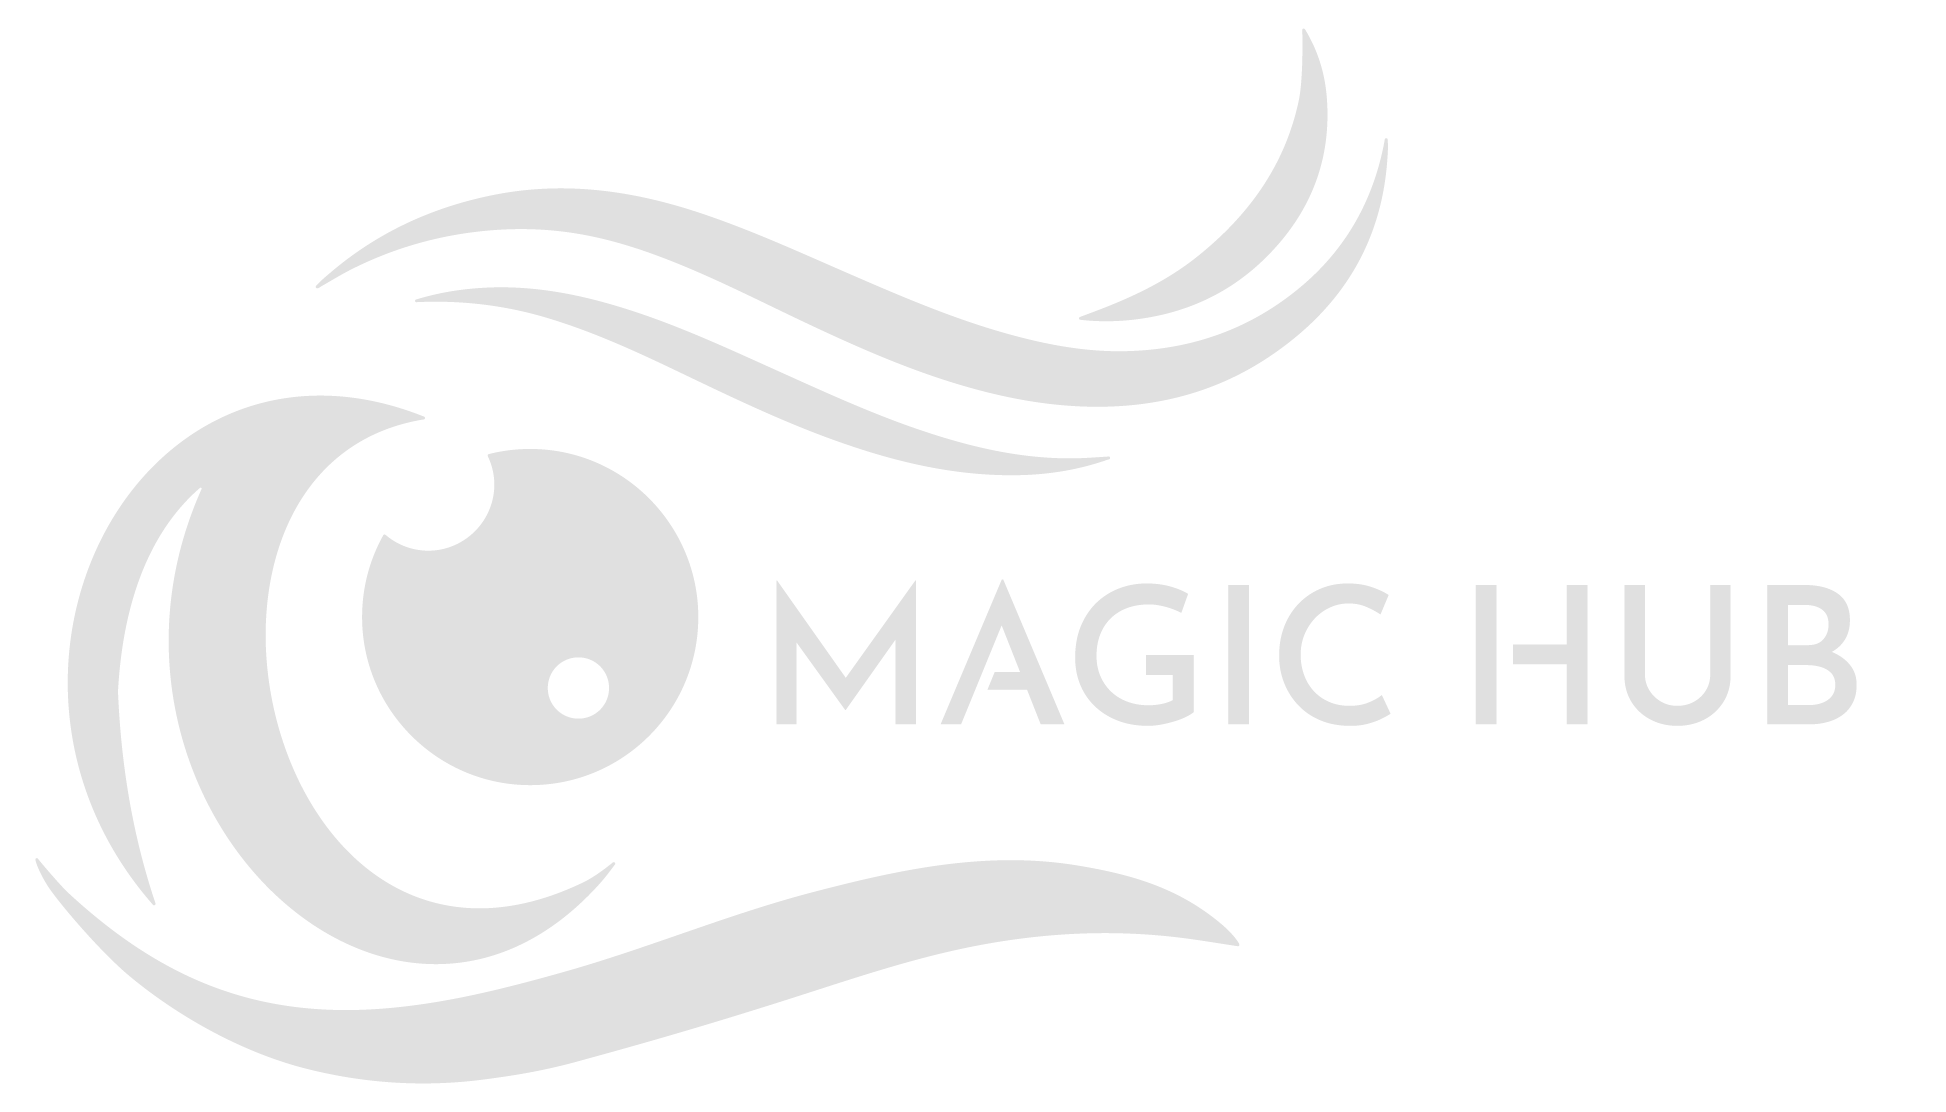 Magichub